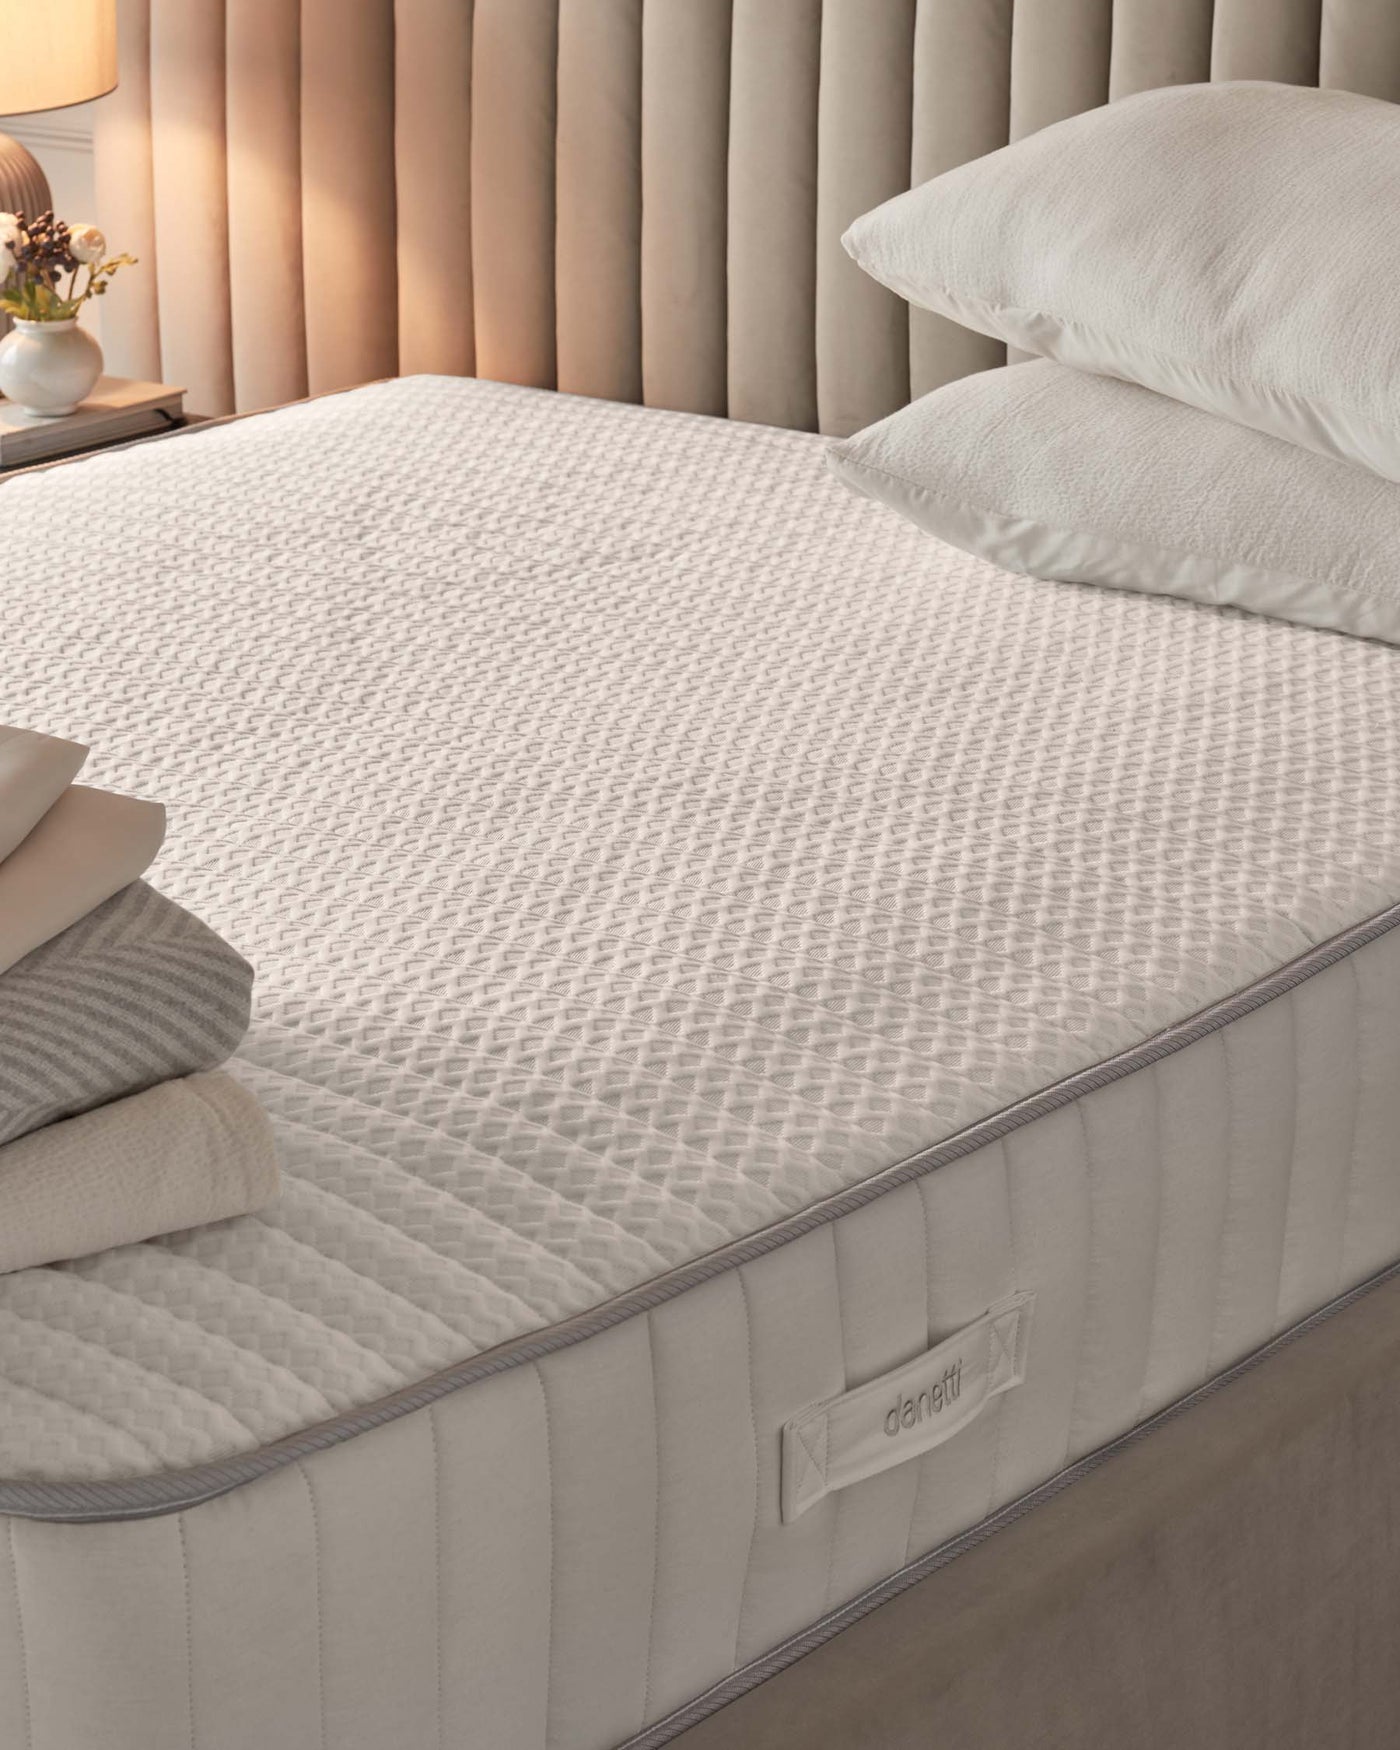 blissful comfort 1500 pocket spring mattress king